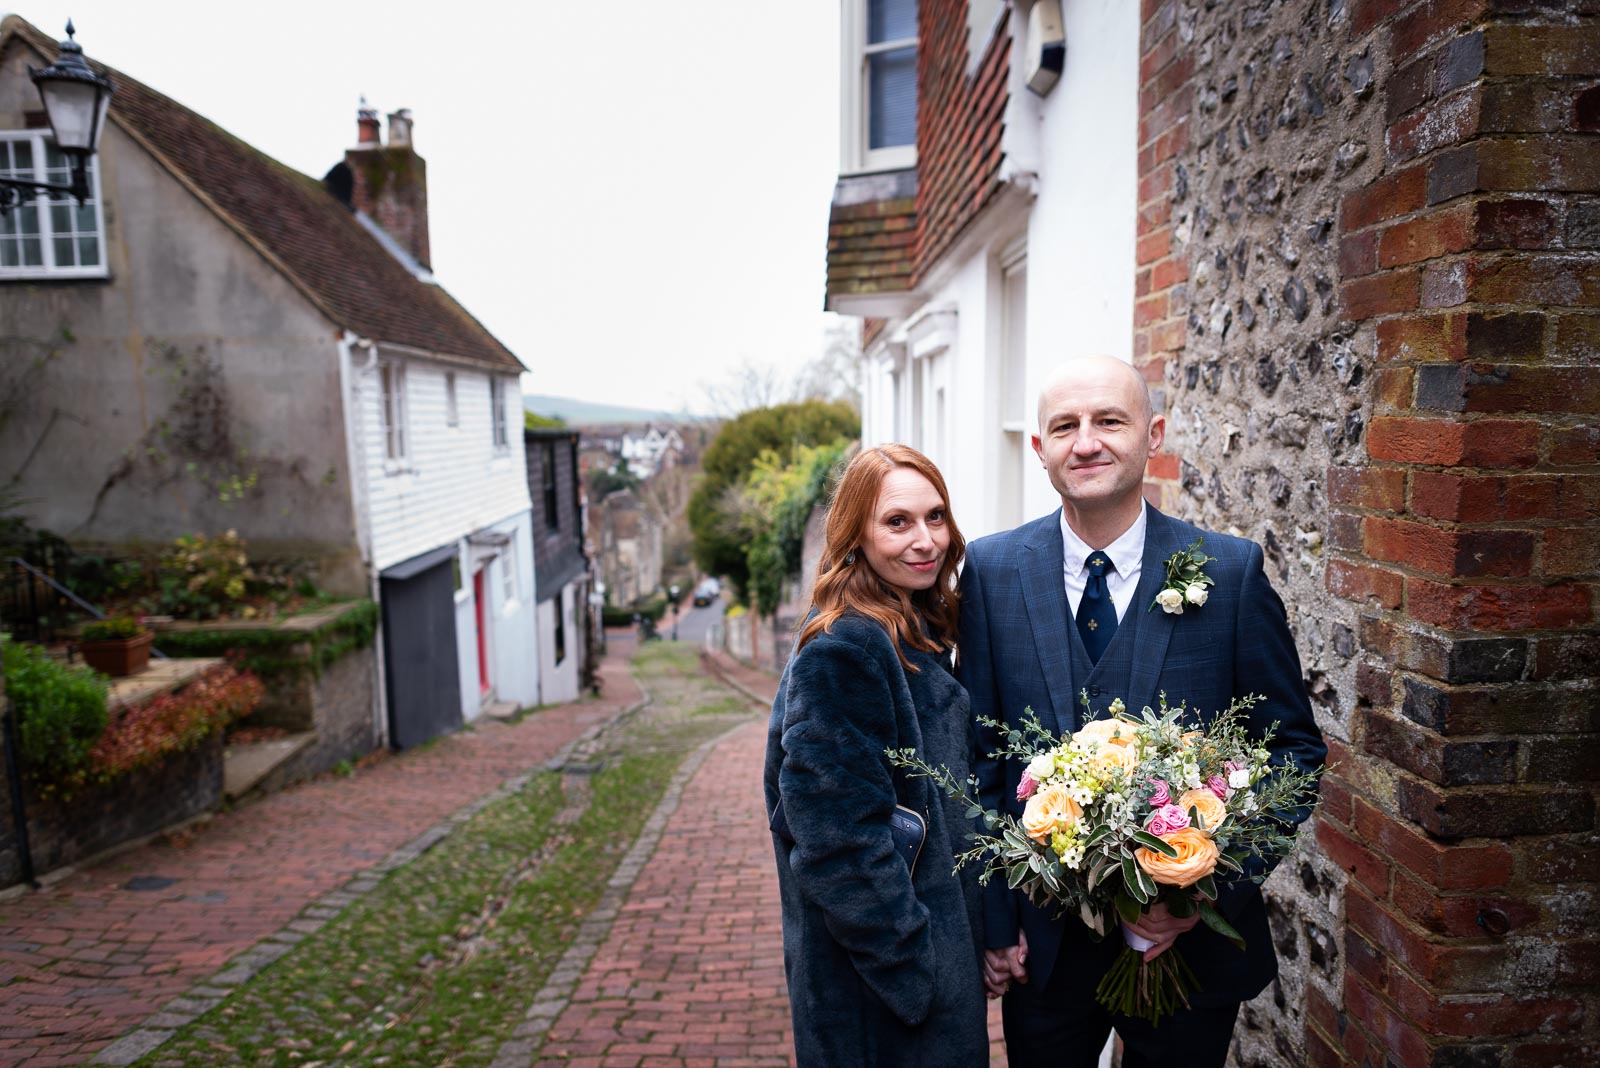 Melanie and Ryan pose on Keere street after their wedding in Lewes Register Office.